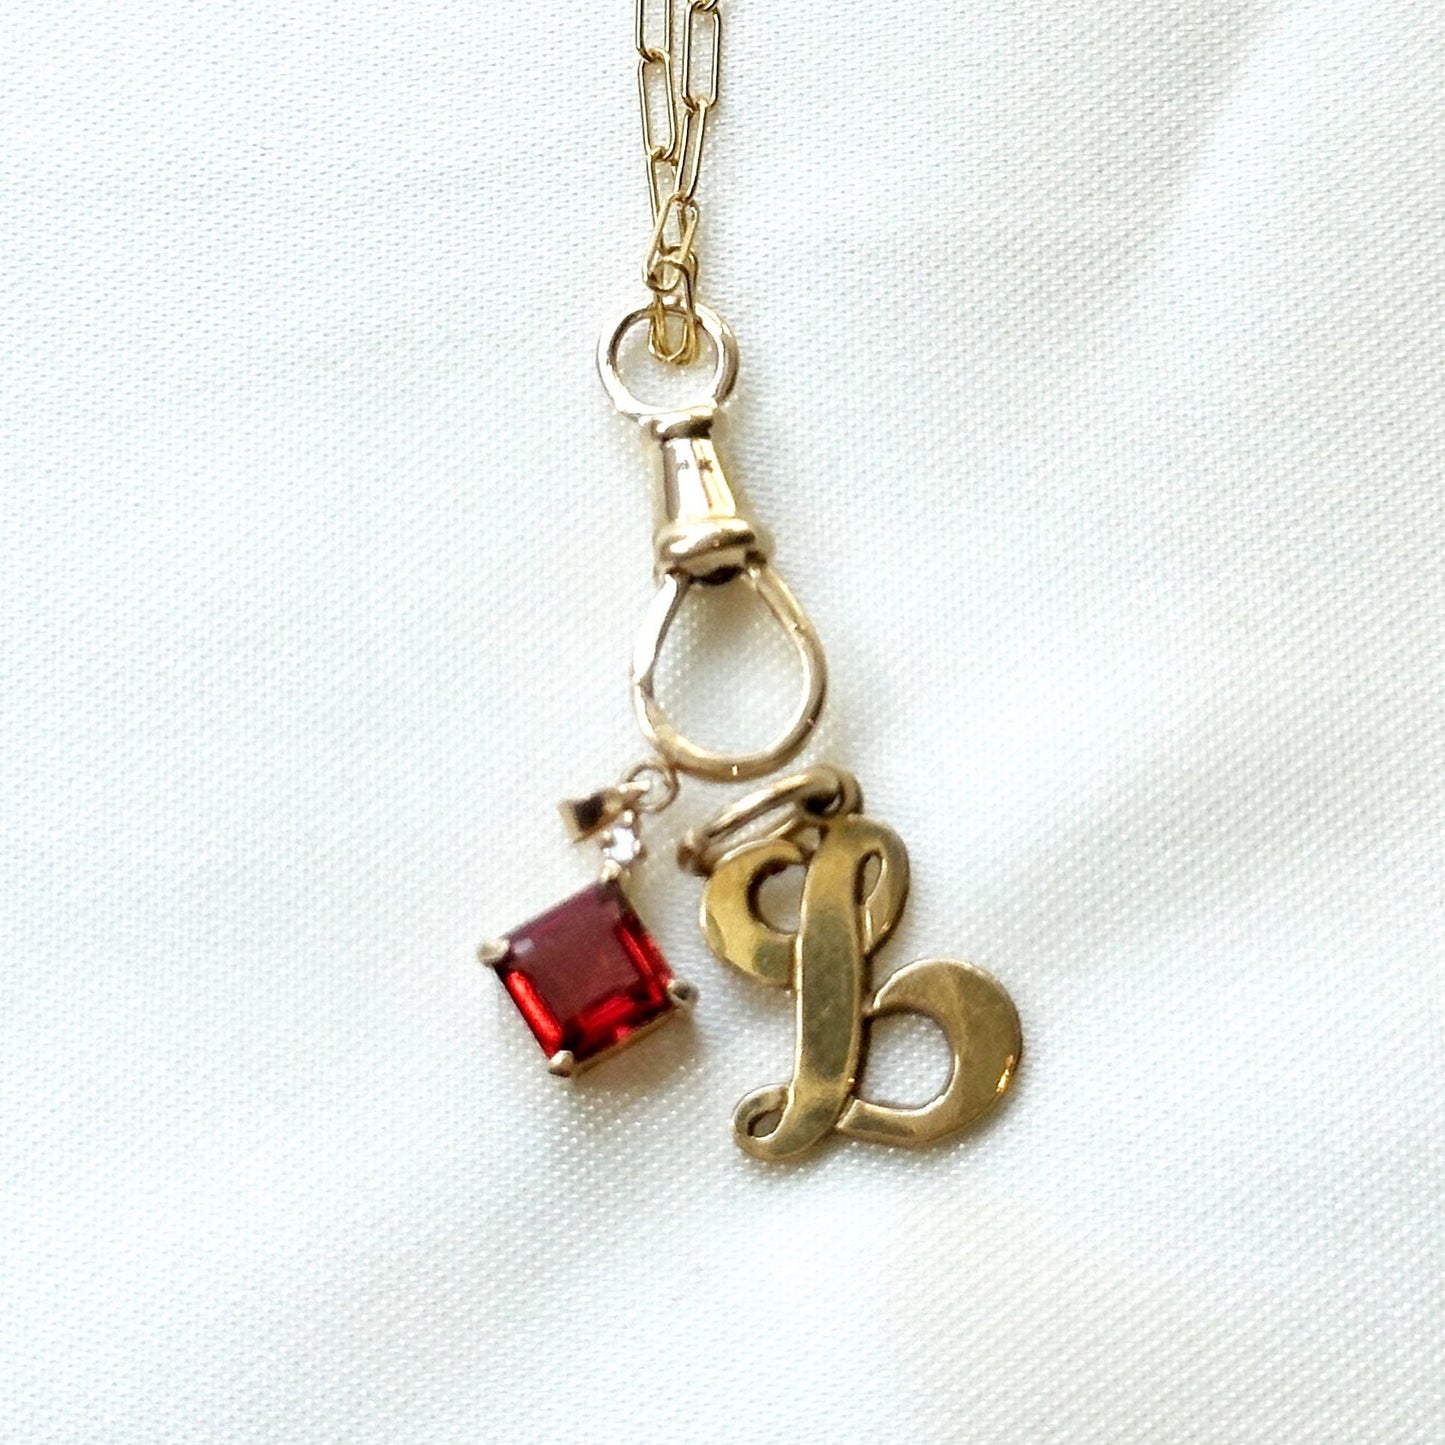 solid gold charm holder necklace - custom vintage charm necklace